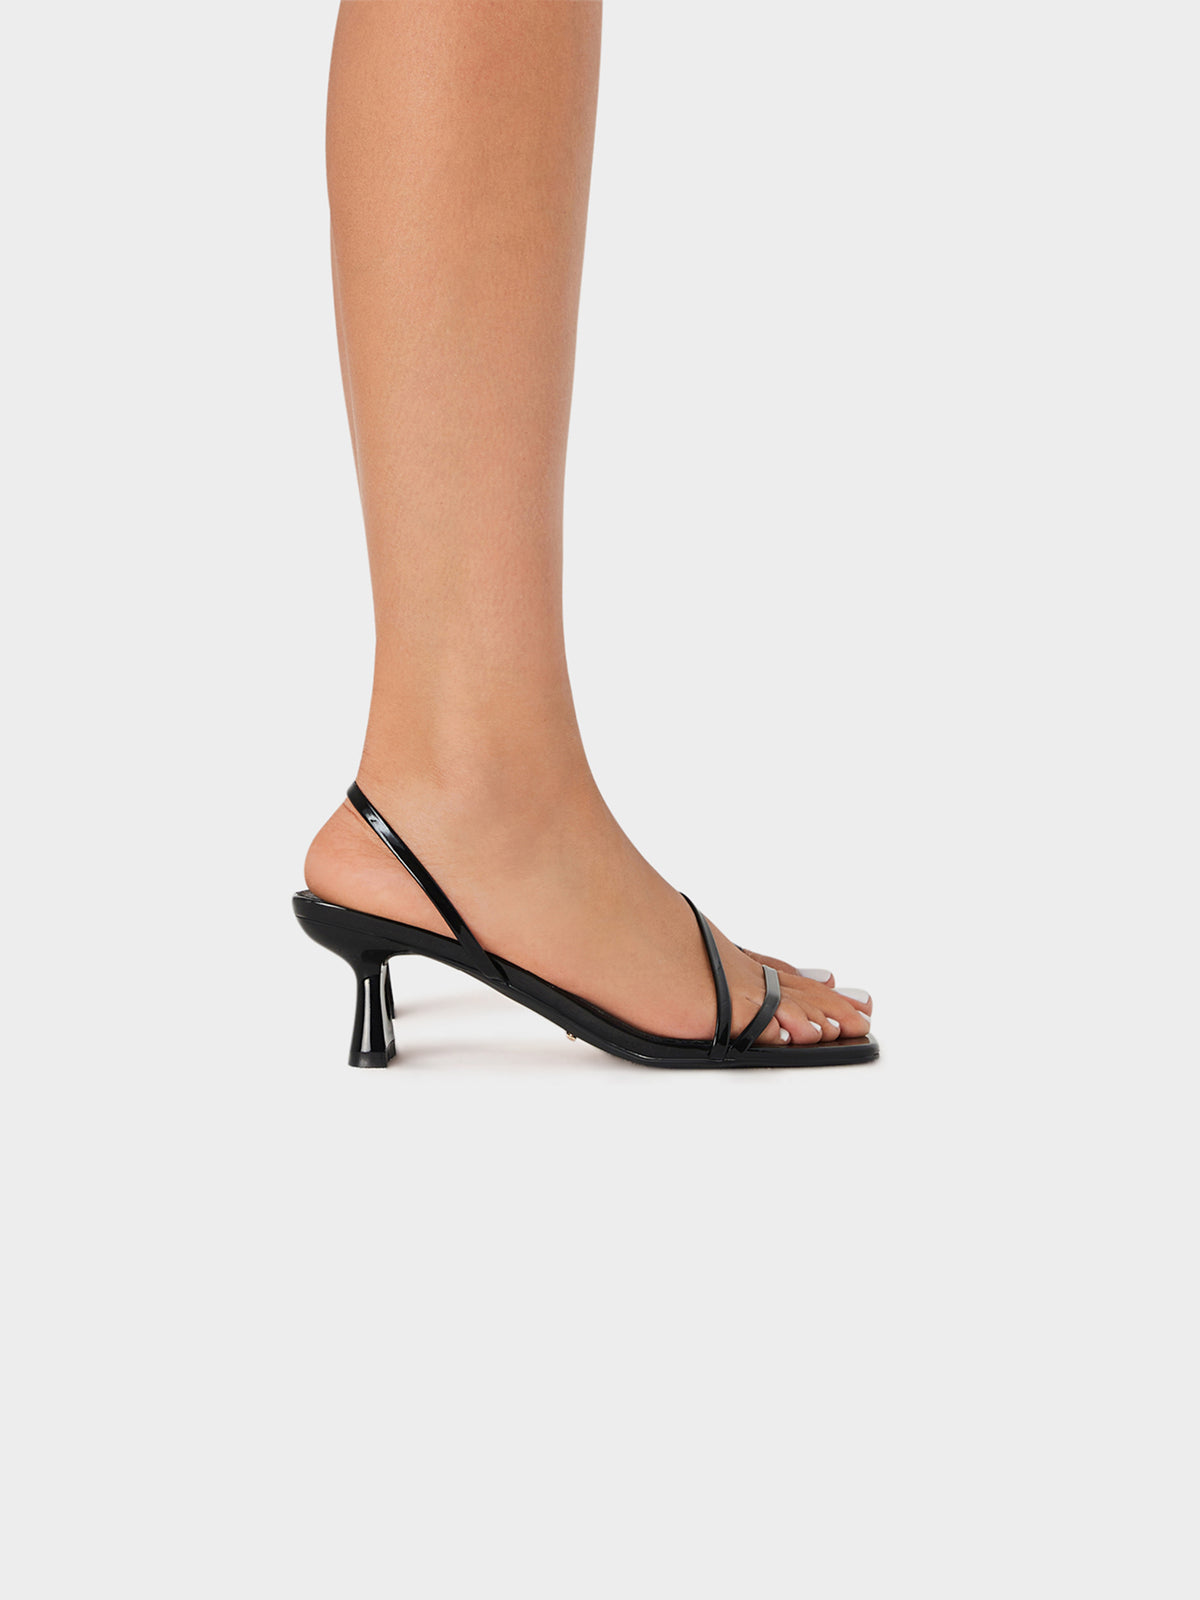 Womens Valina Heels in Black Patent